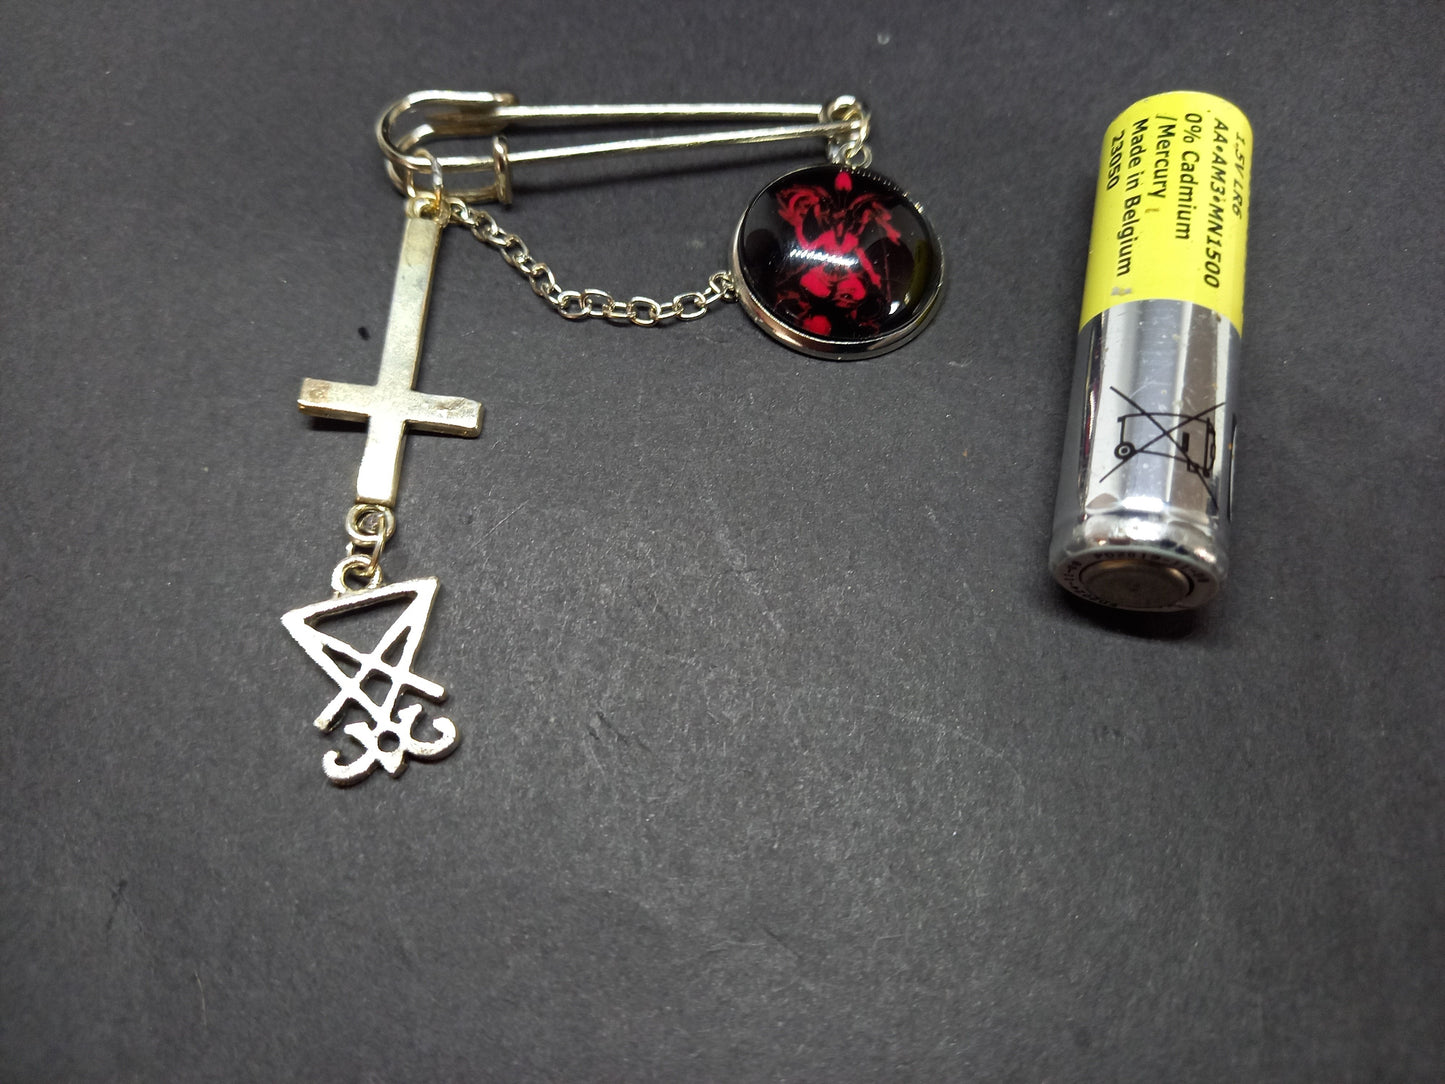 "Hail Satan / Ave Satanas" Baphomet ,sigil of satan and inverted cross with chain kilt pin brooch